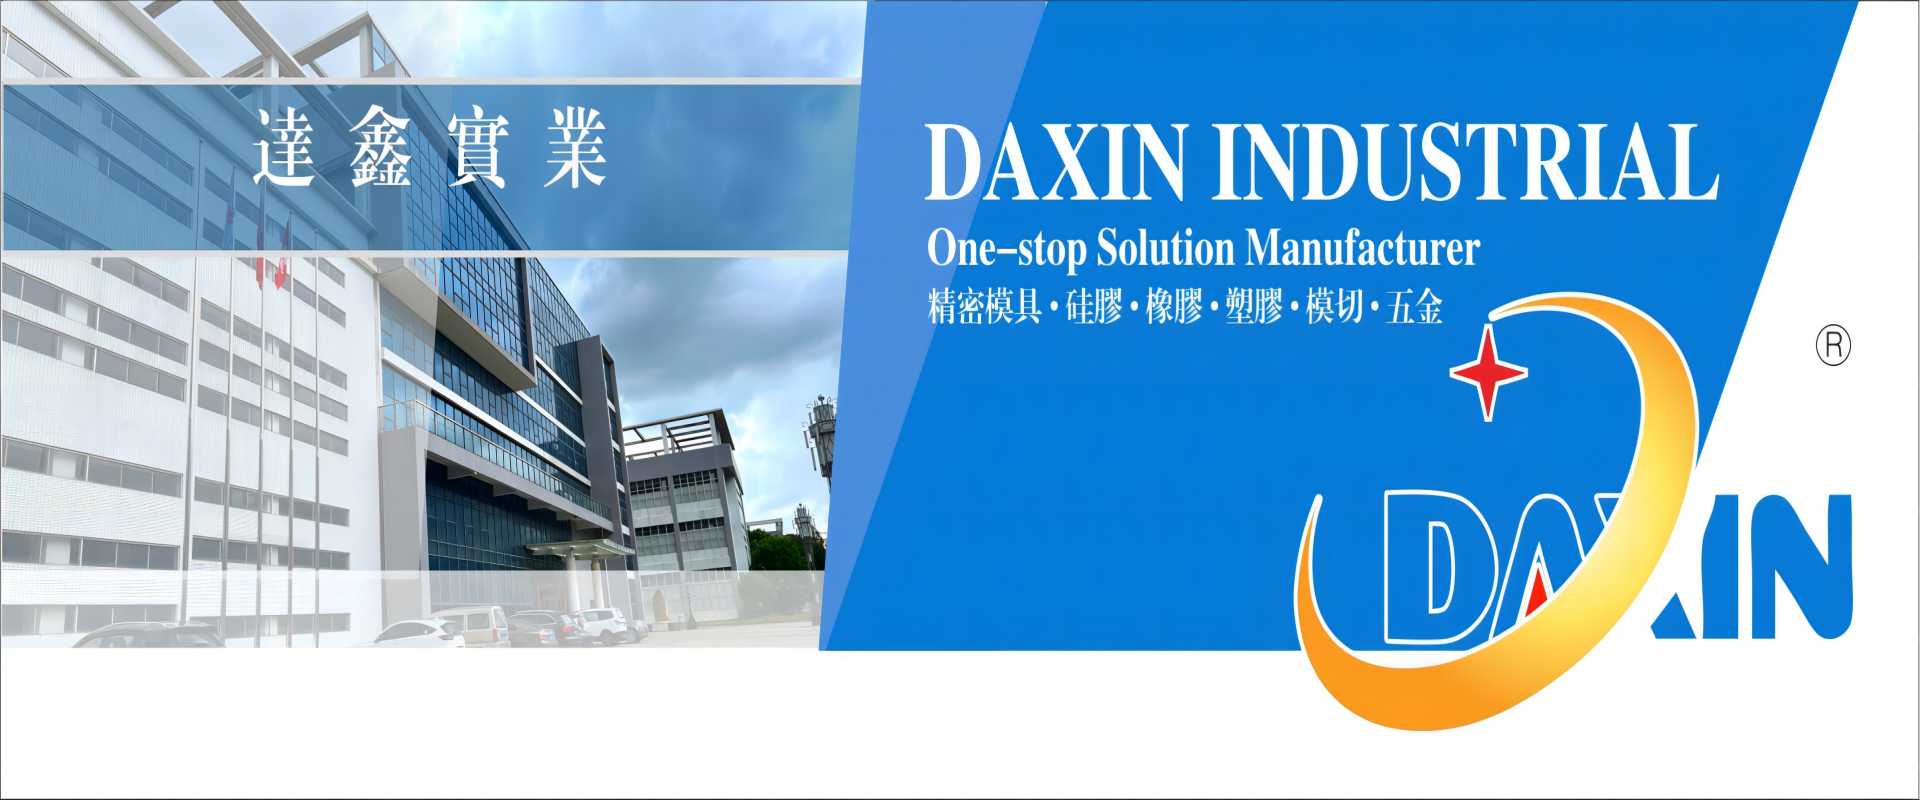 daxin banner